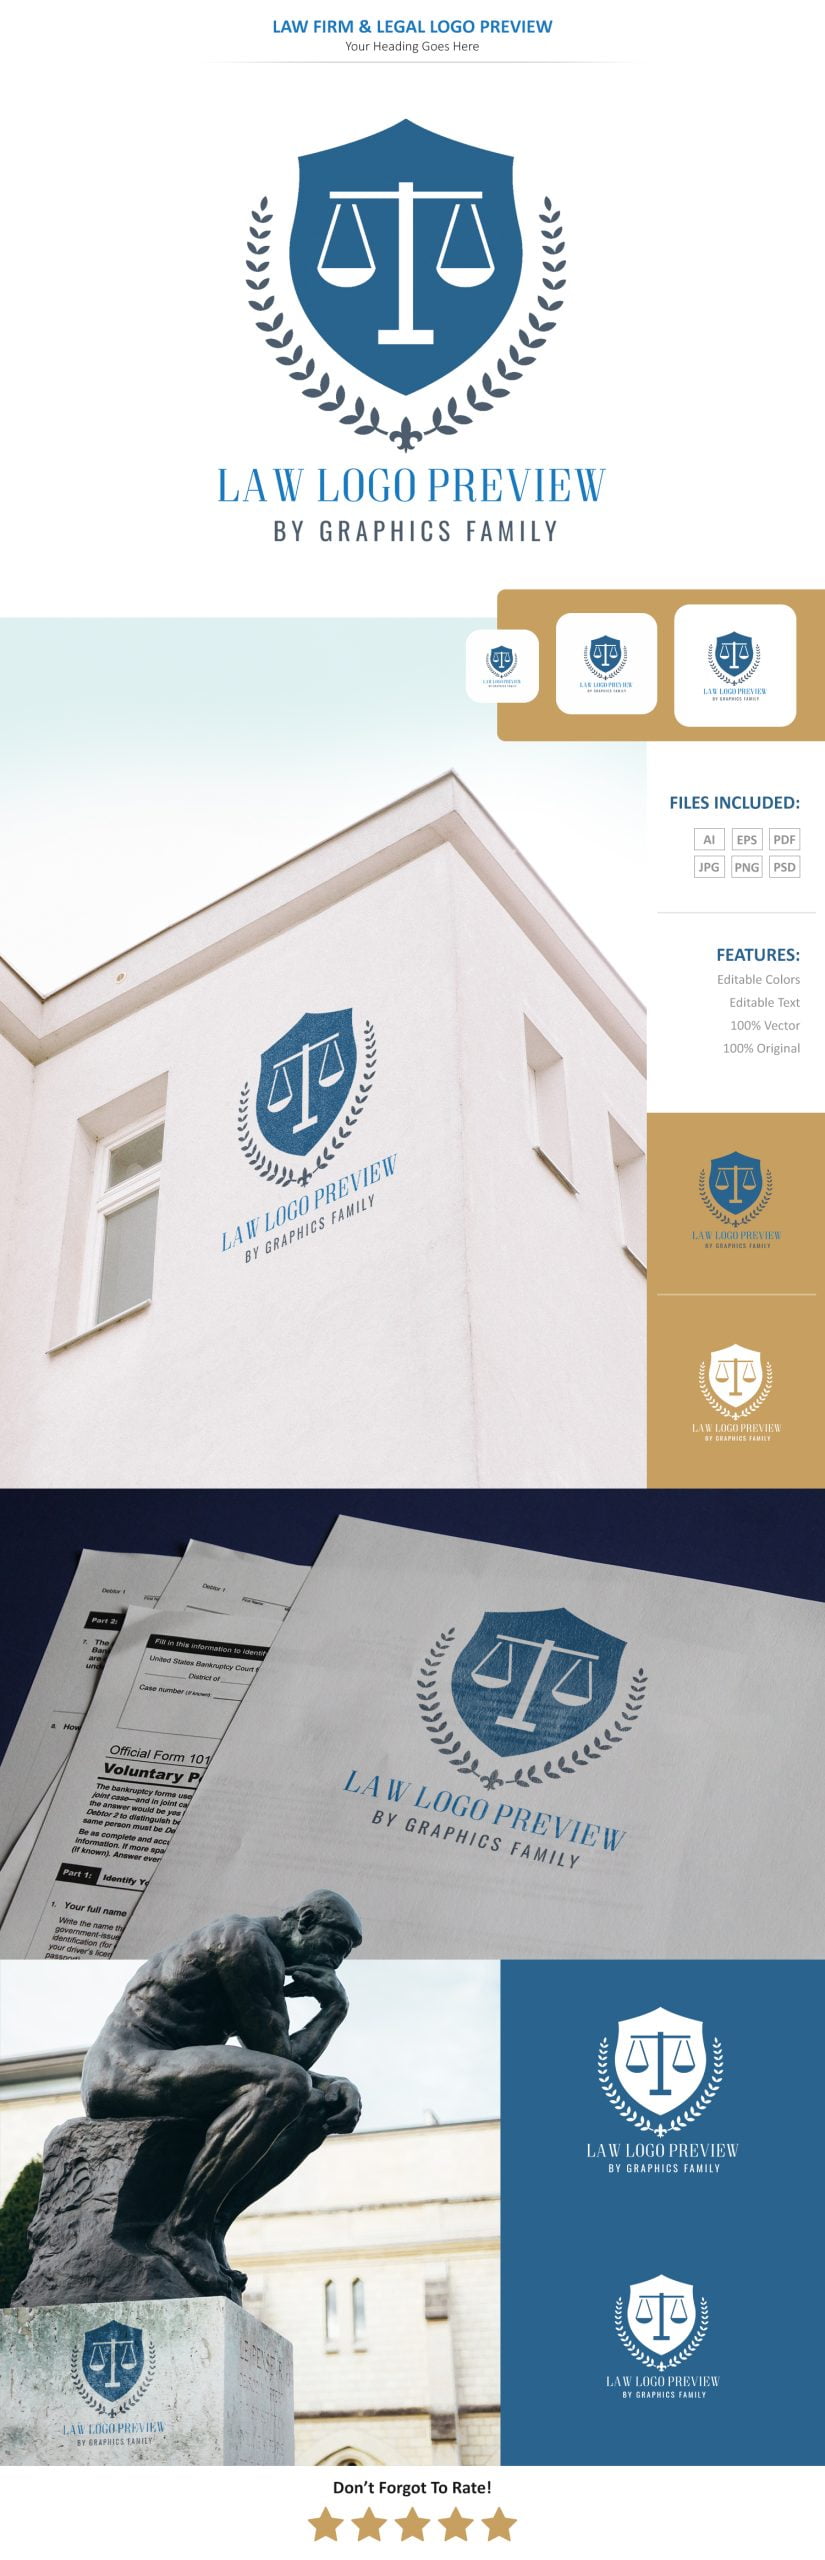 Law Firm & Legal Logo Mockup Kit Download